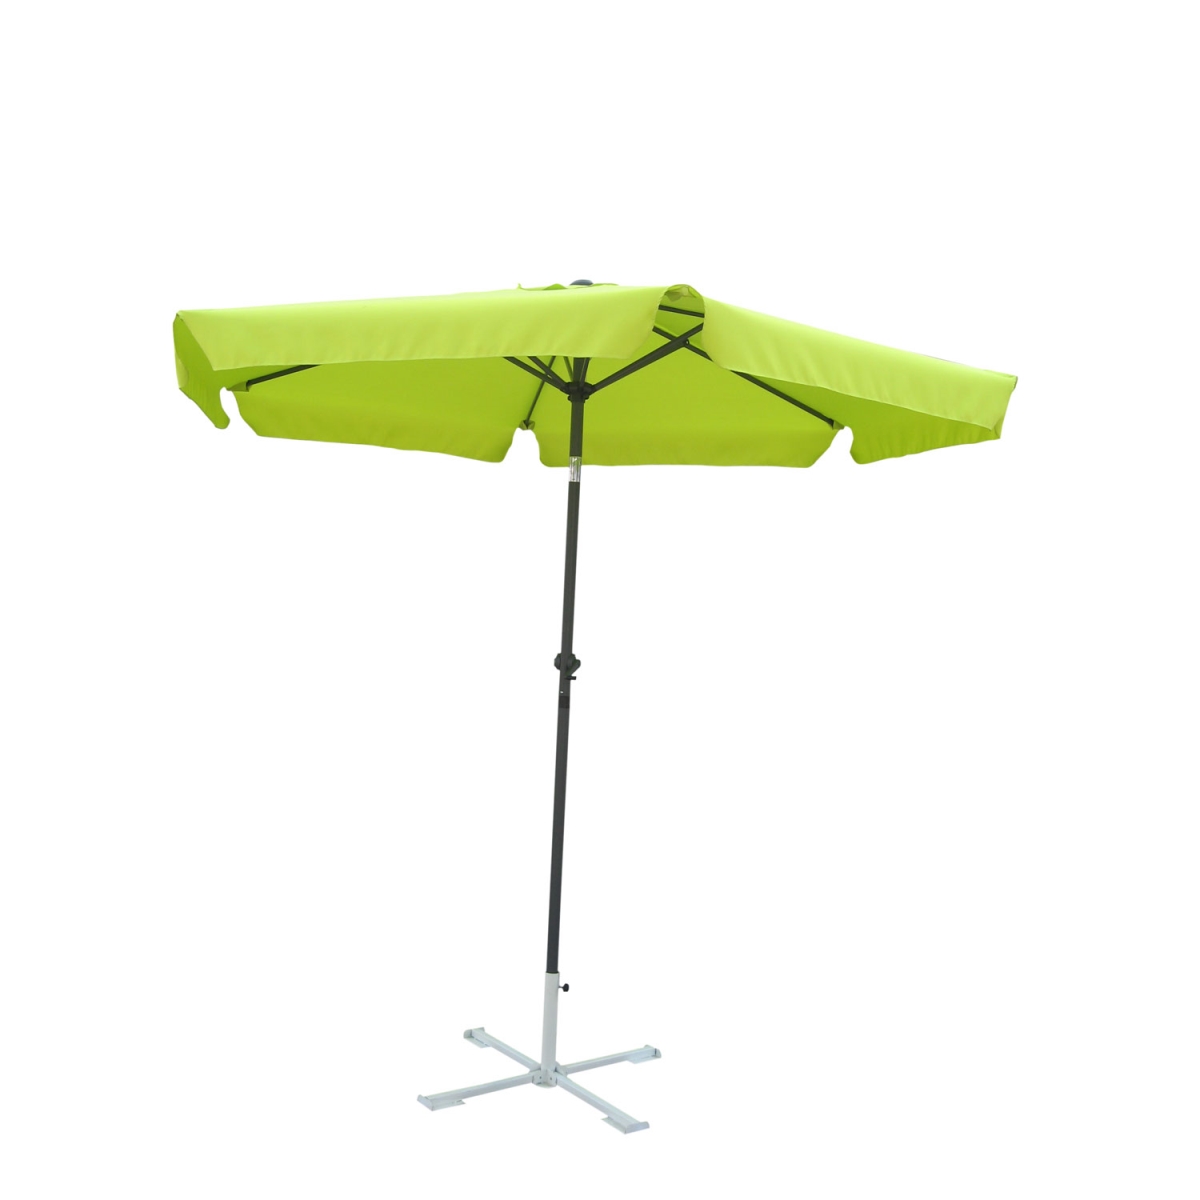 60403-lg 8 Ft. Outdoor Aluminum Umbrella, Light Green